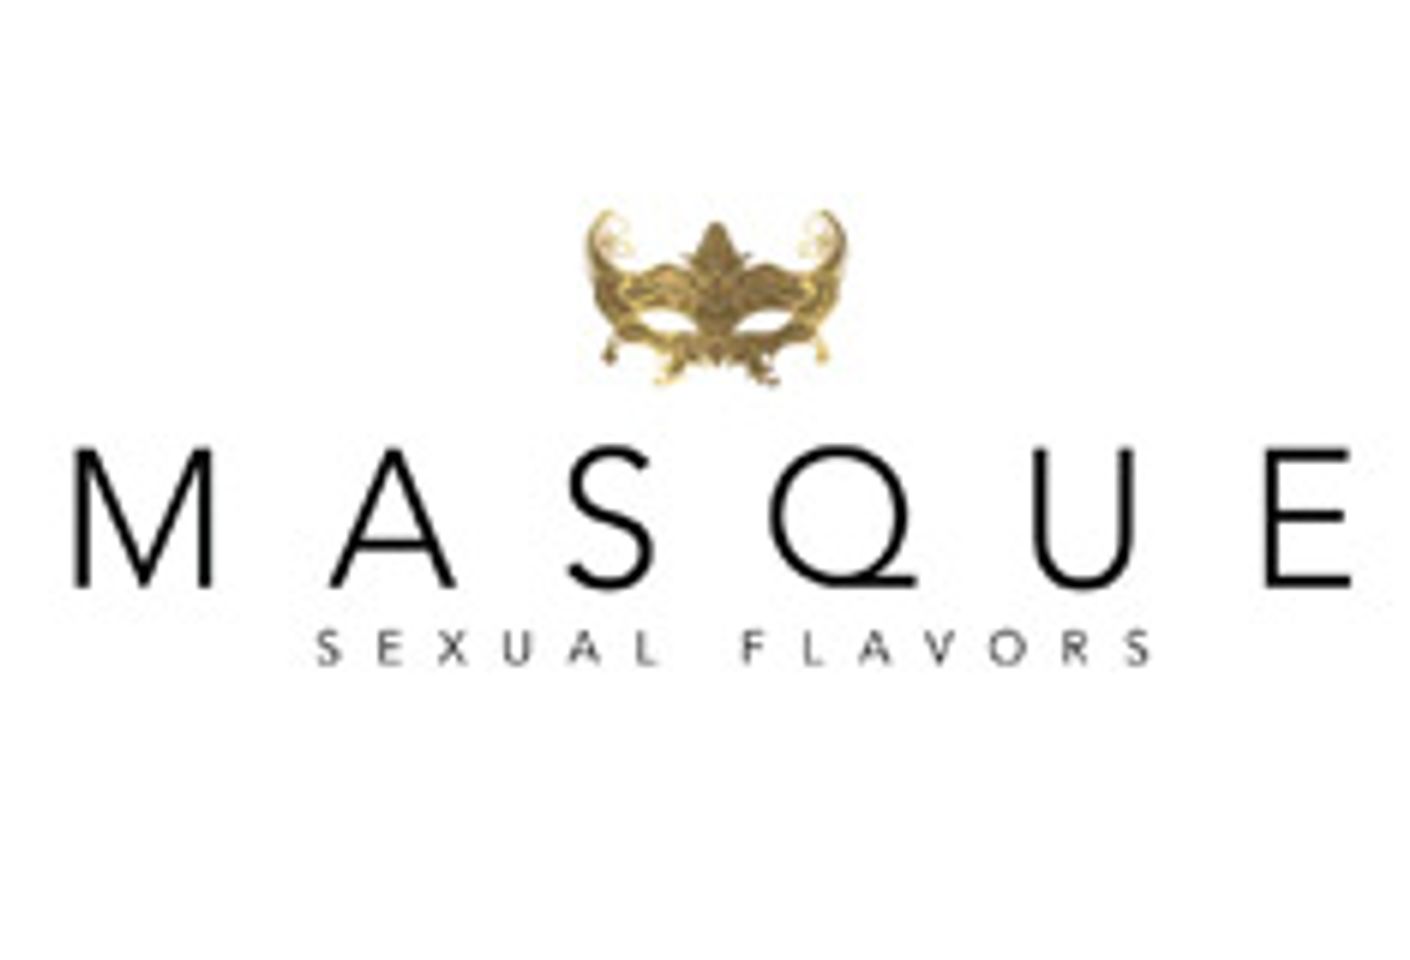 Masque Sexual Flavors Named Premier Sponsor of Under My Big Top